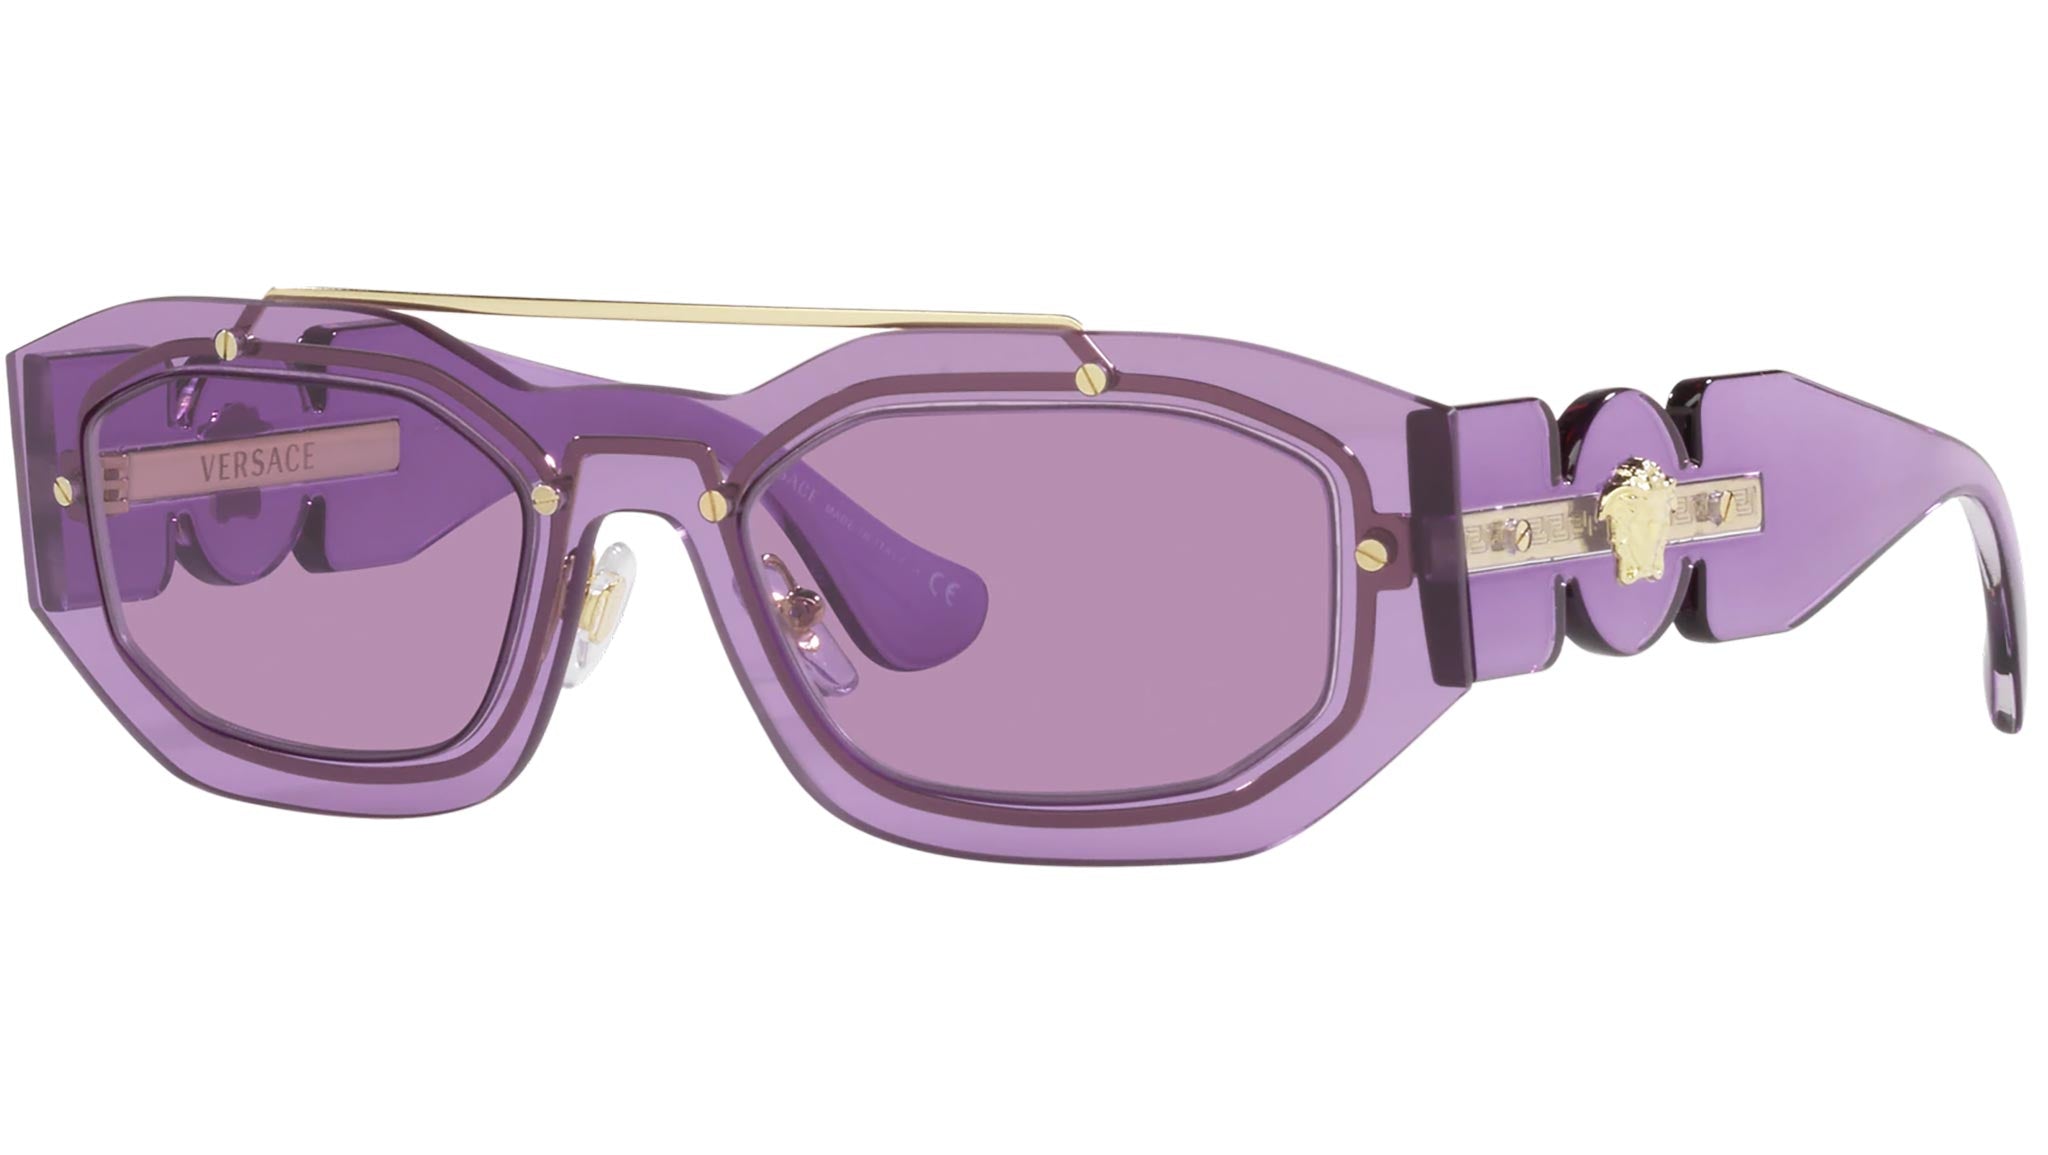 Versace 2235 1002/84 Sunglasses Violet/Violet Rectangle Shape 51-20-140 |  EyeSpecs.com